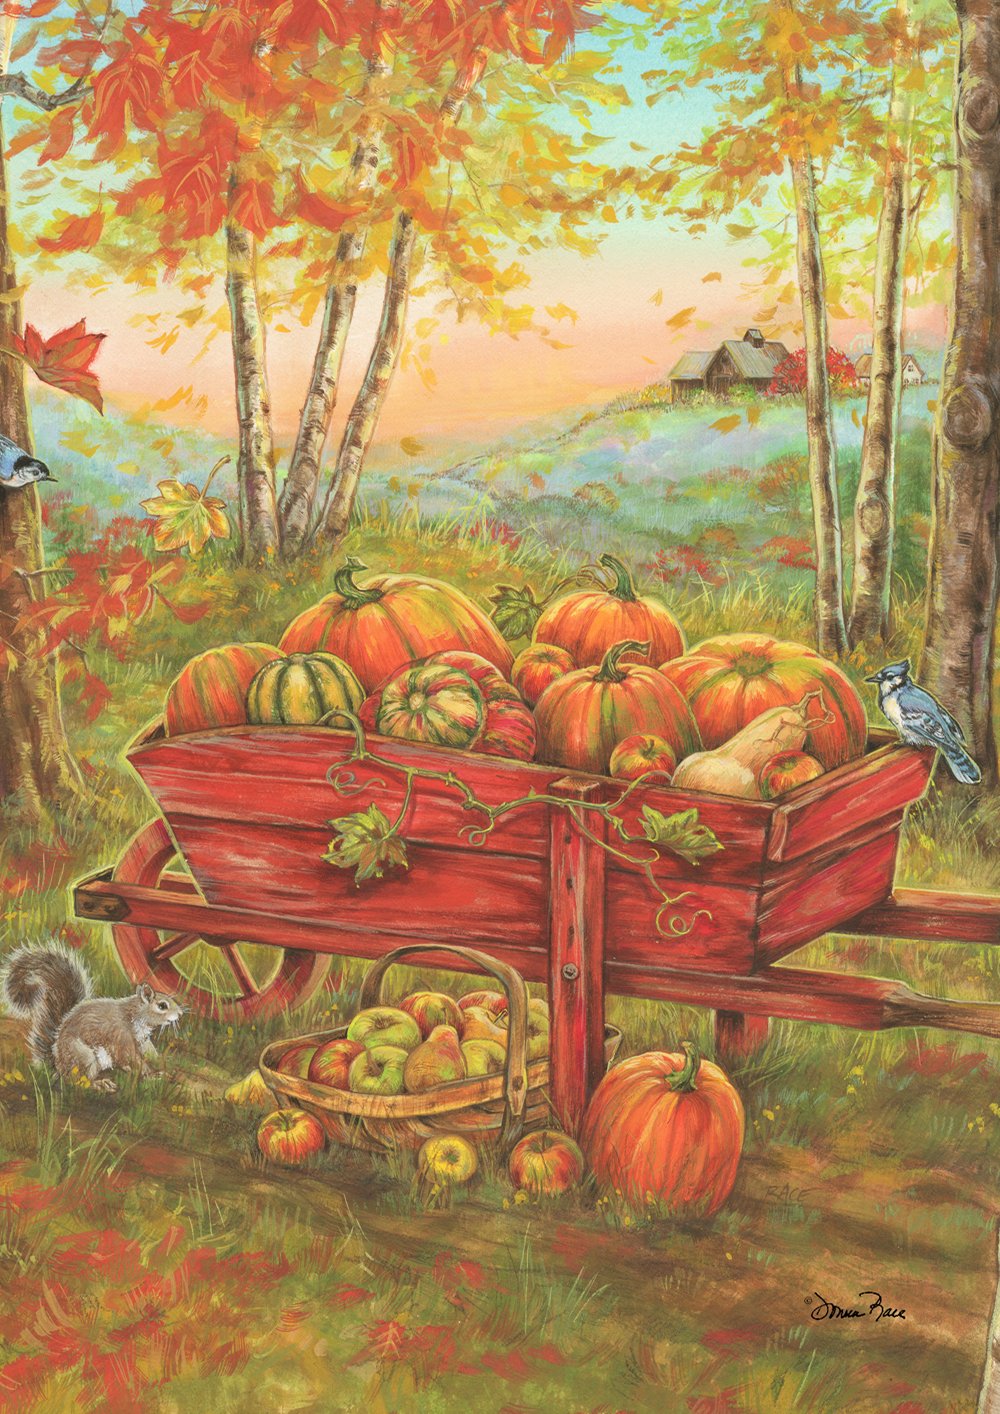 Toland Home Garden Harvest Wheel Barrow Pumpkin Fall Flag Double Sided 12x18 Inch - image 1 of 5